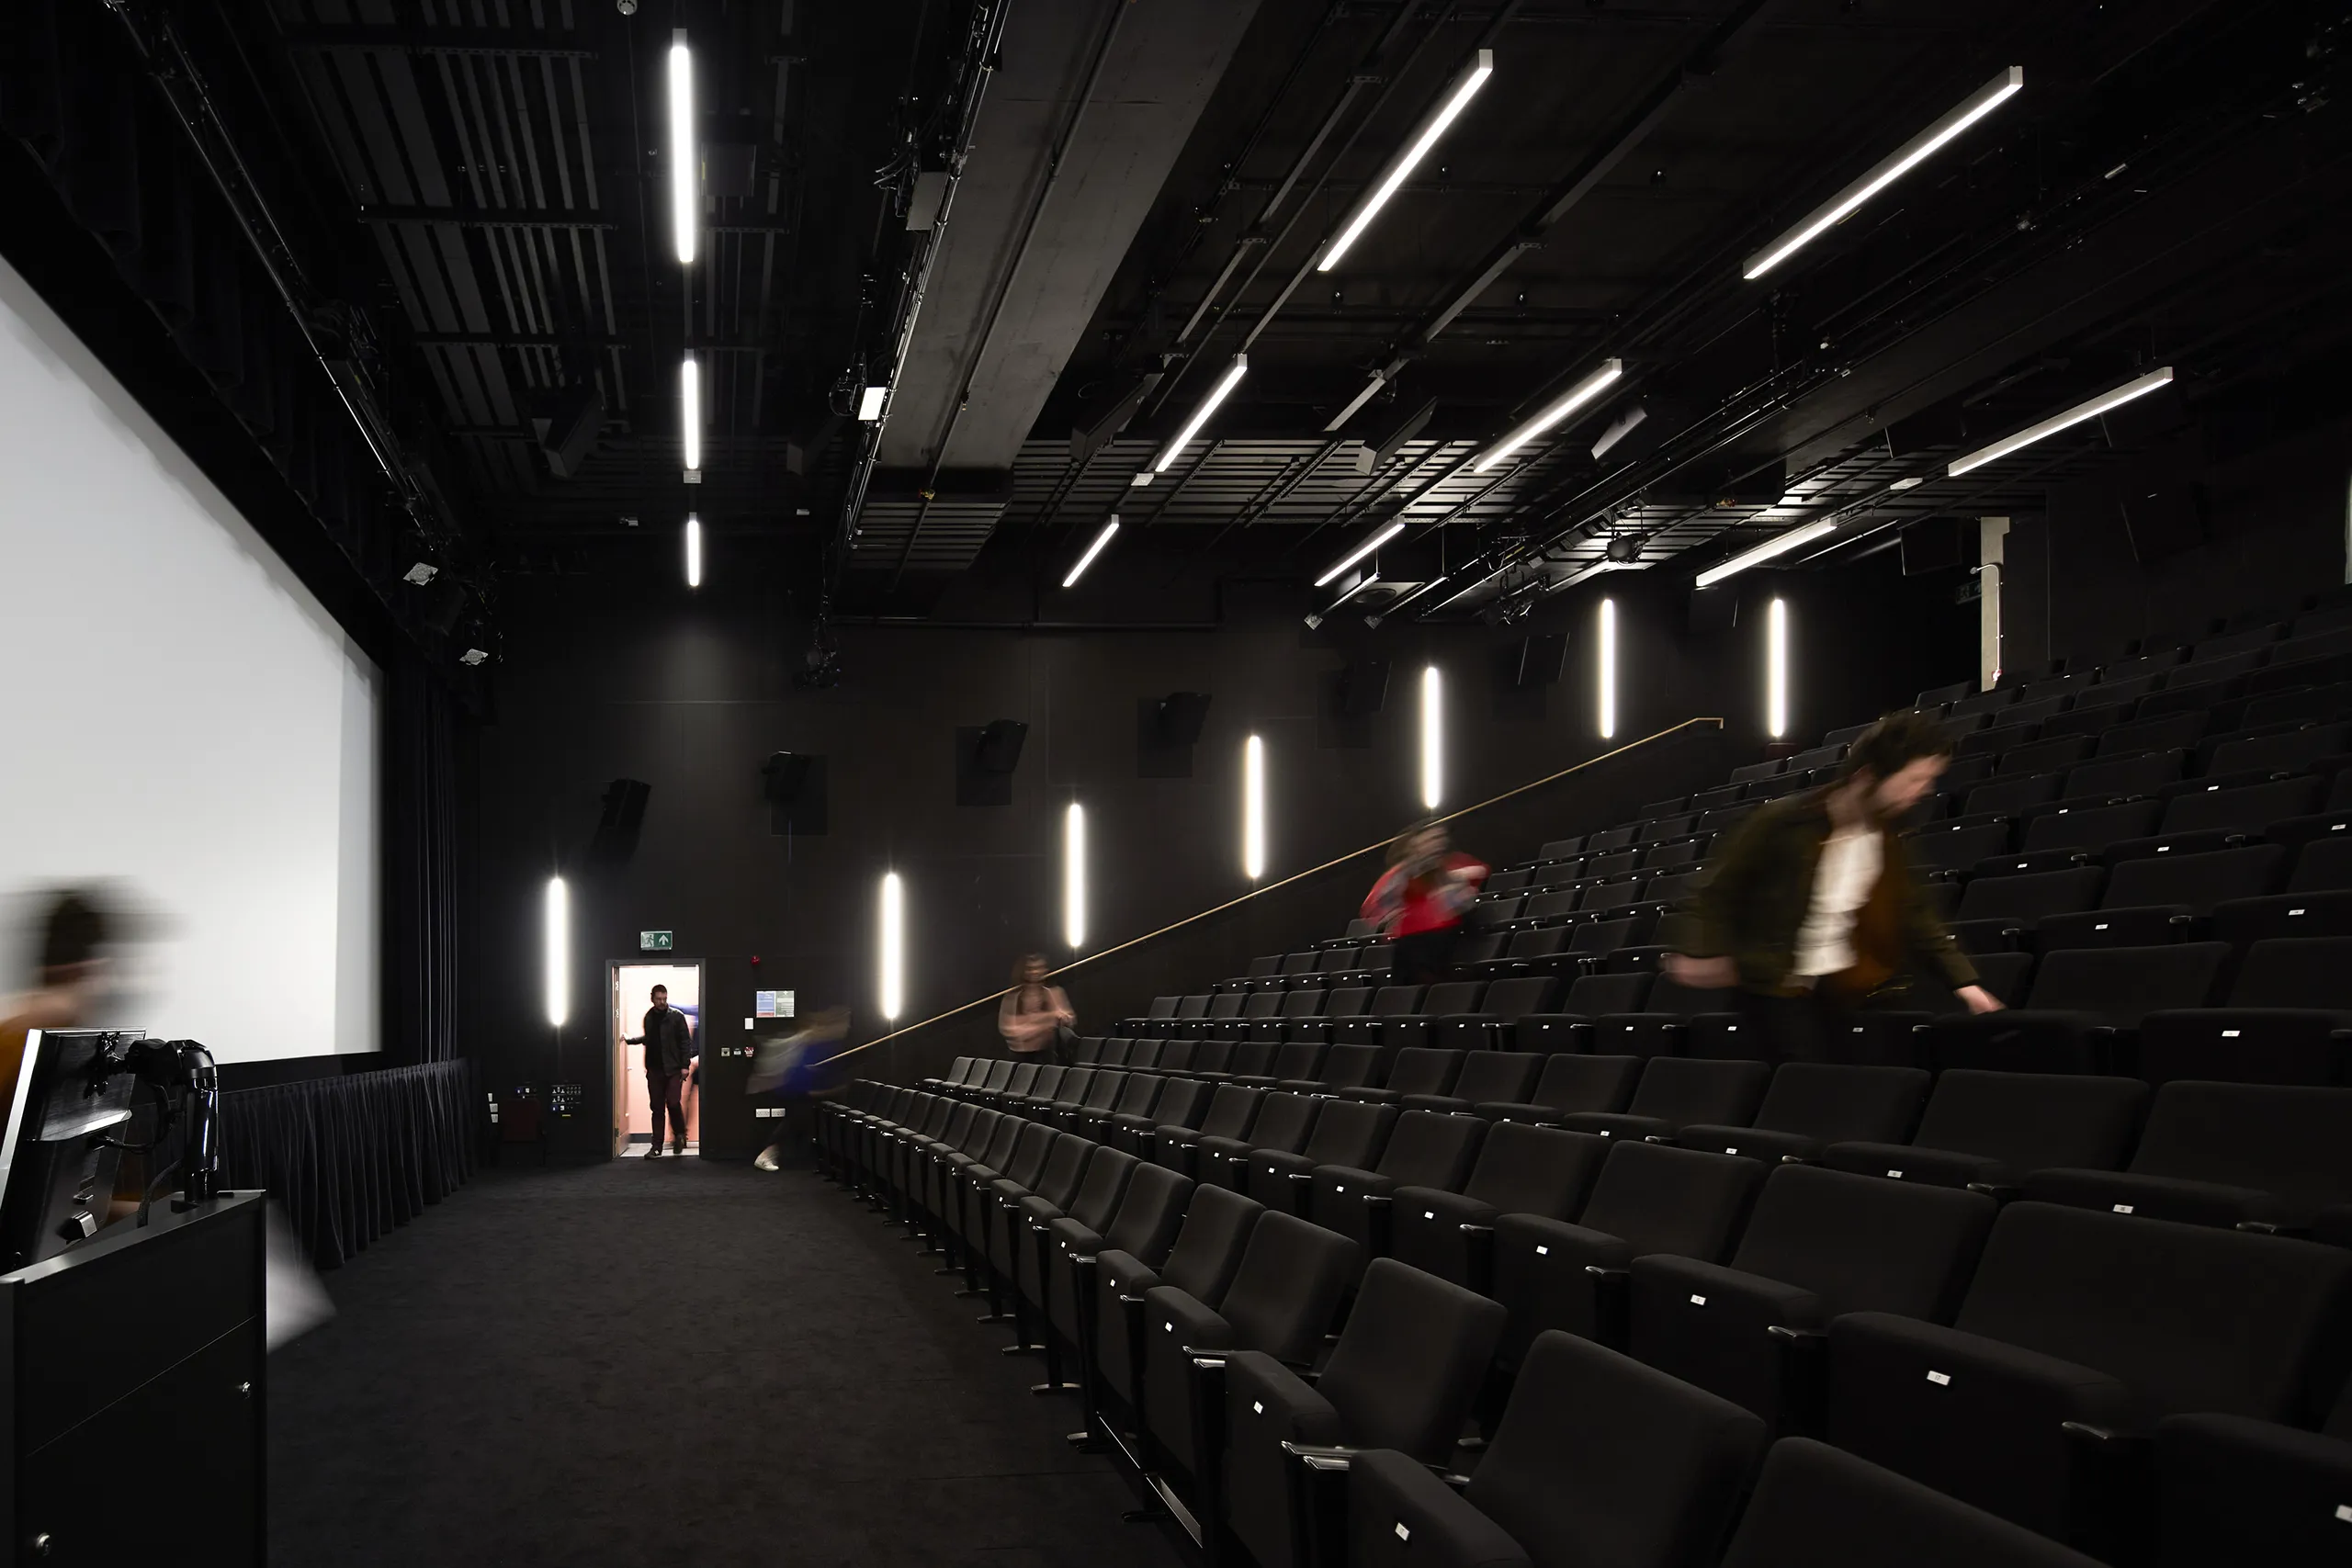 Leeds Beckett University cinema